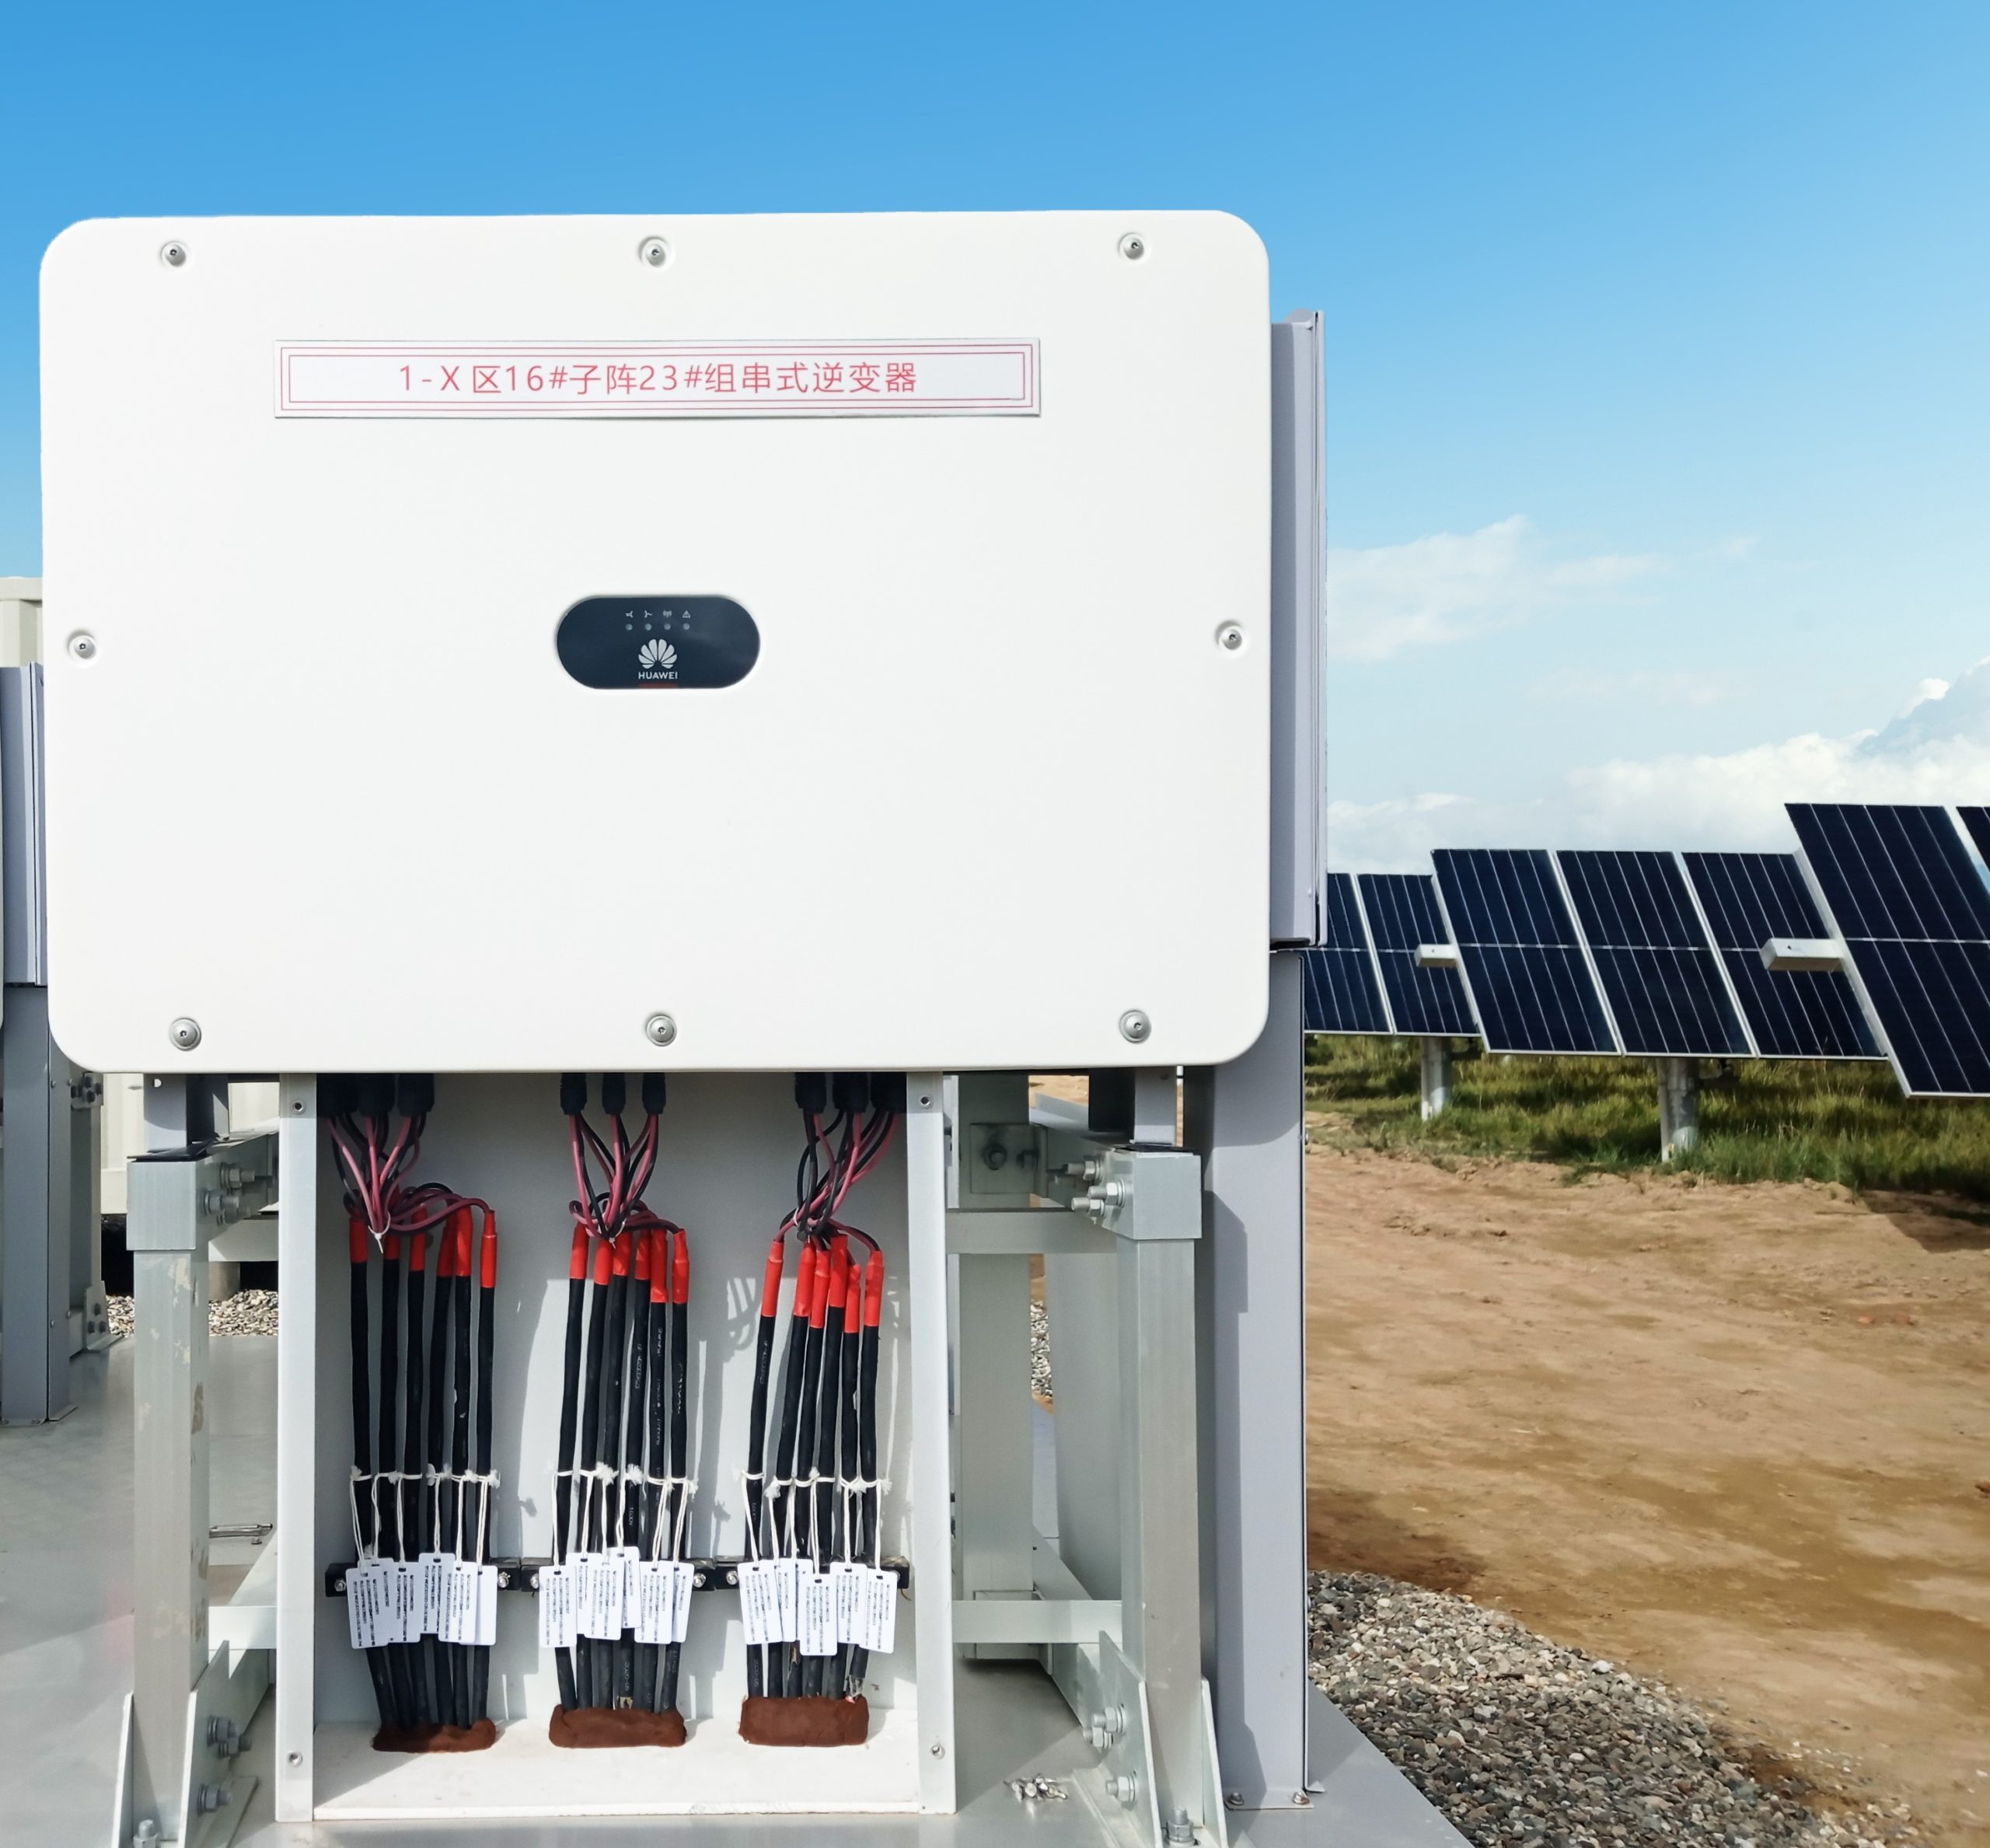 Solar Panel to Grid Tie Inverter Instructions